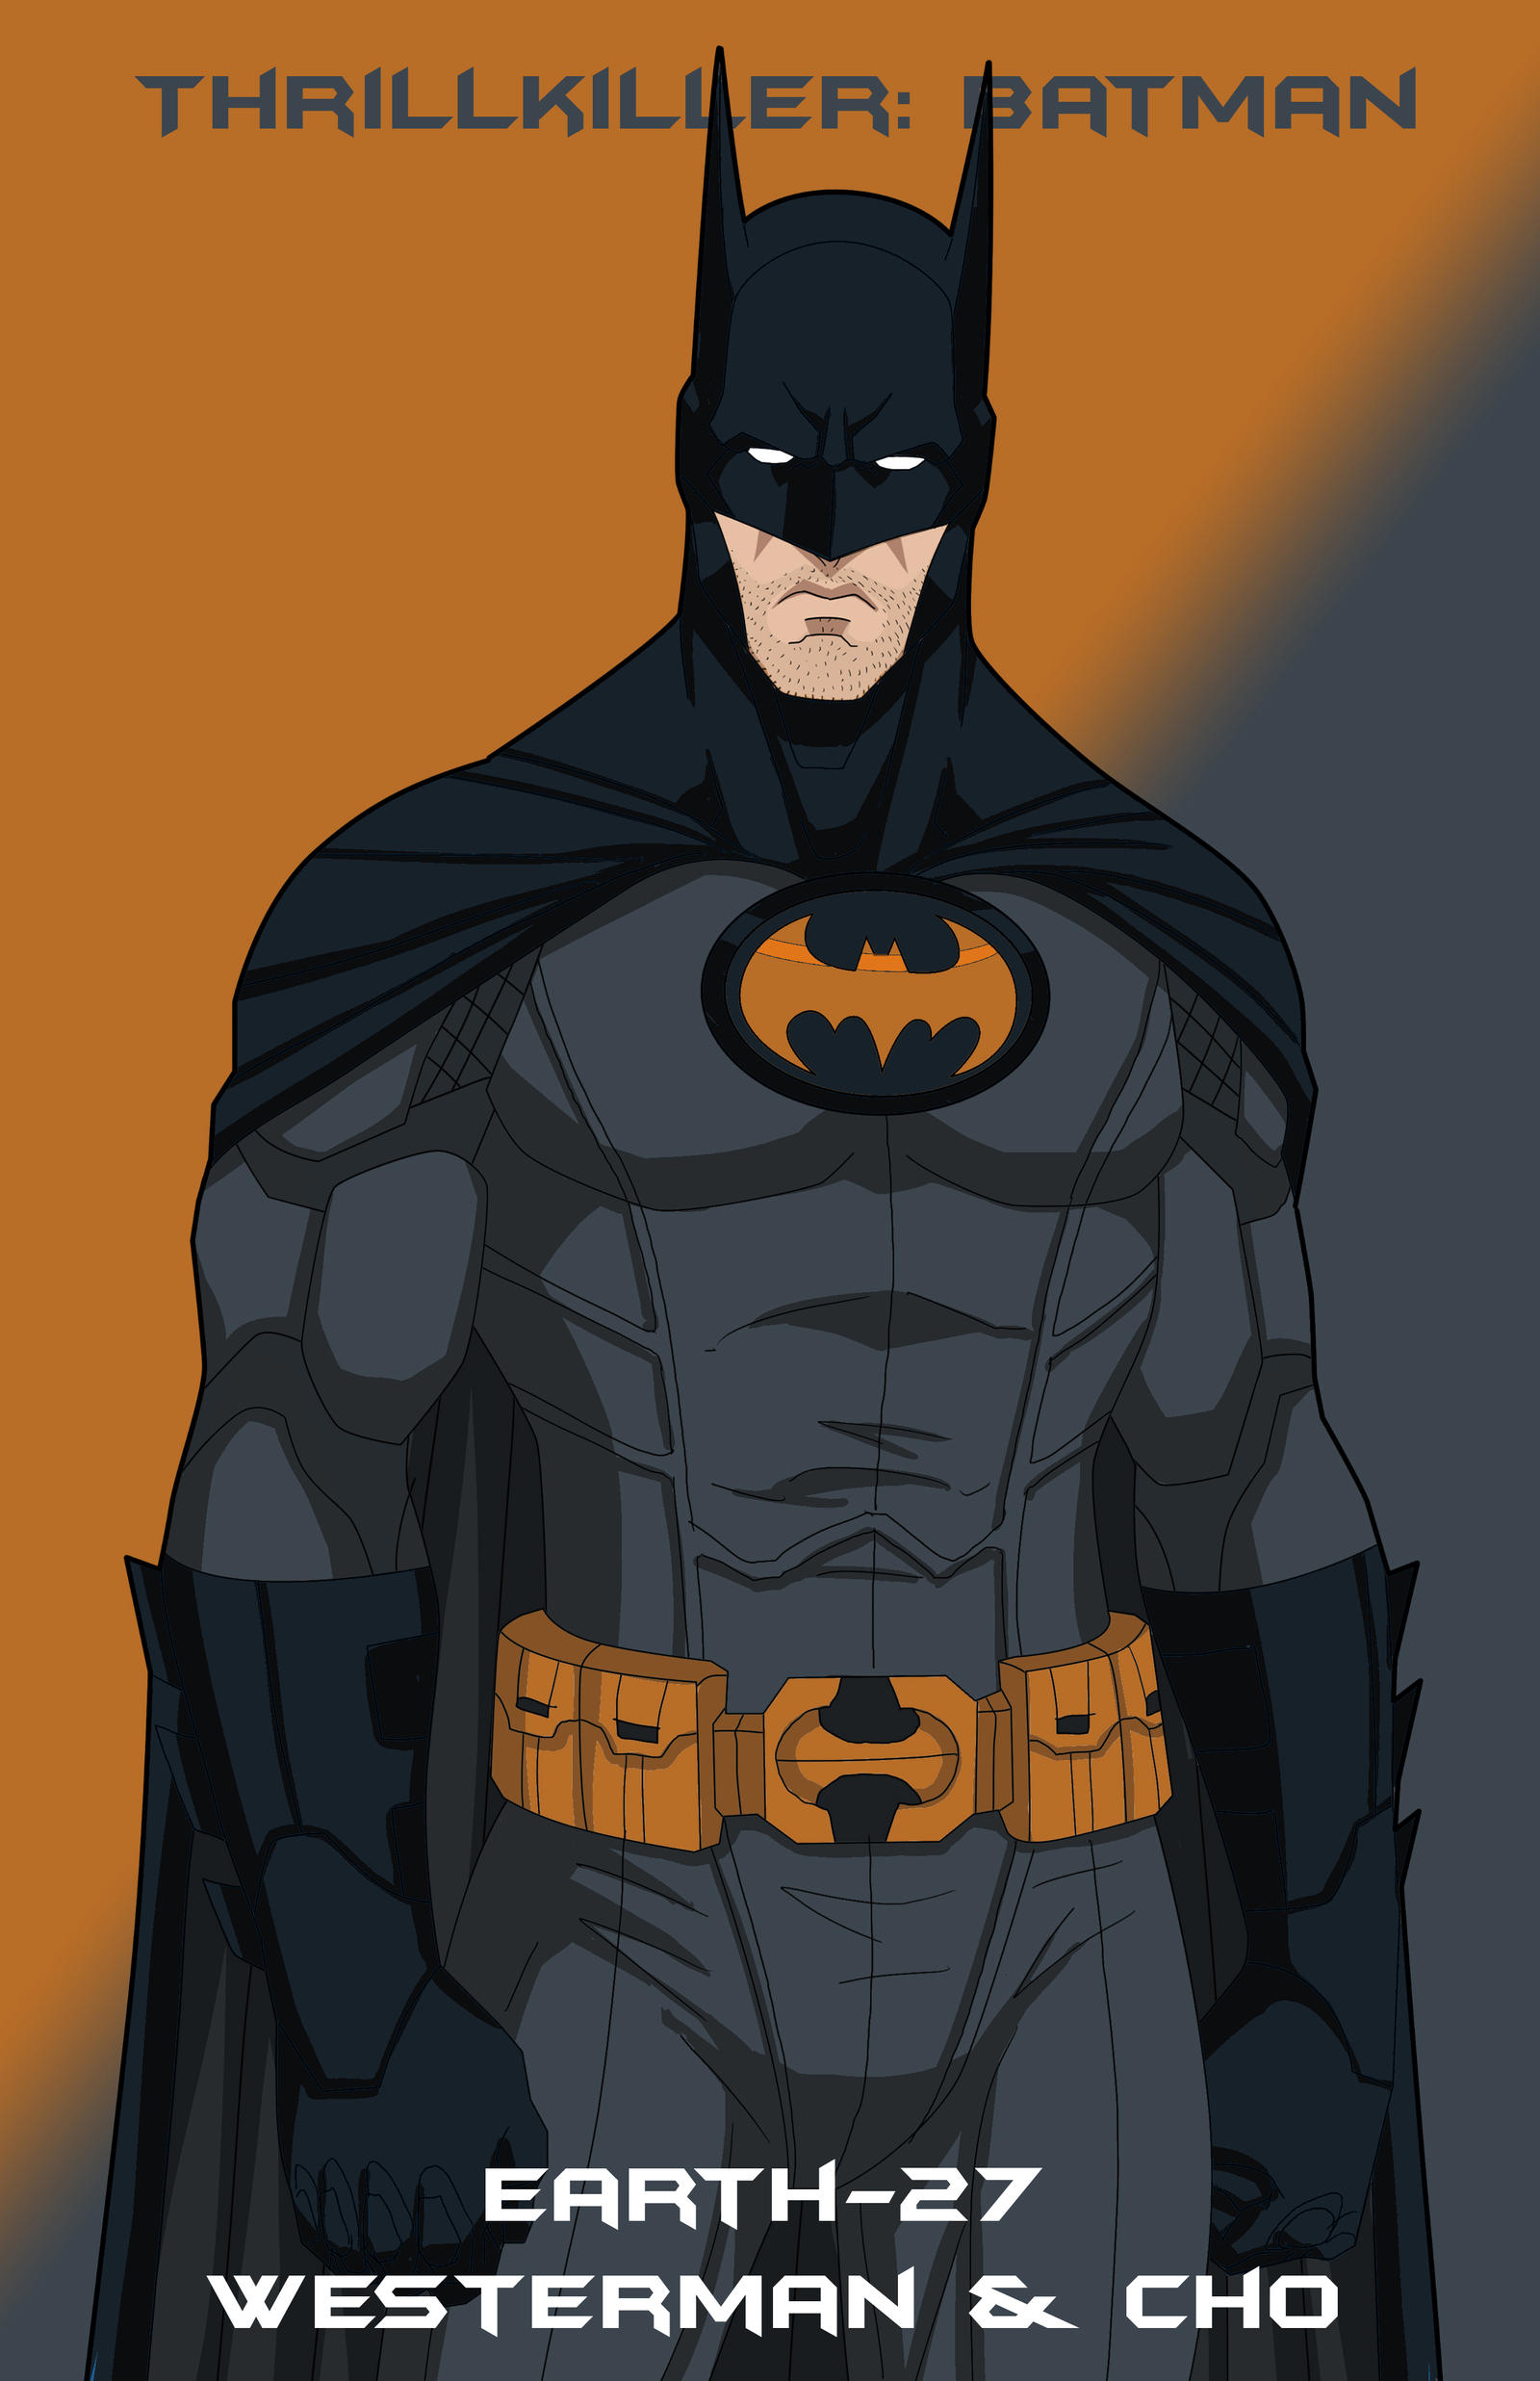 Thrillkiller Batman - Bruce Wayne by Roysovitch on DeviantArt